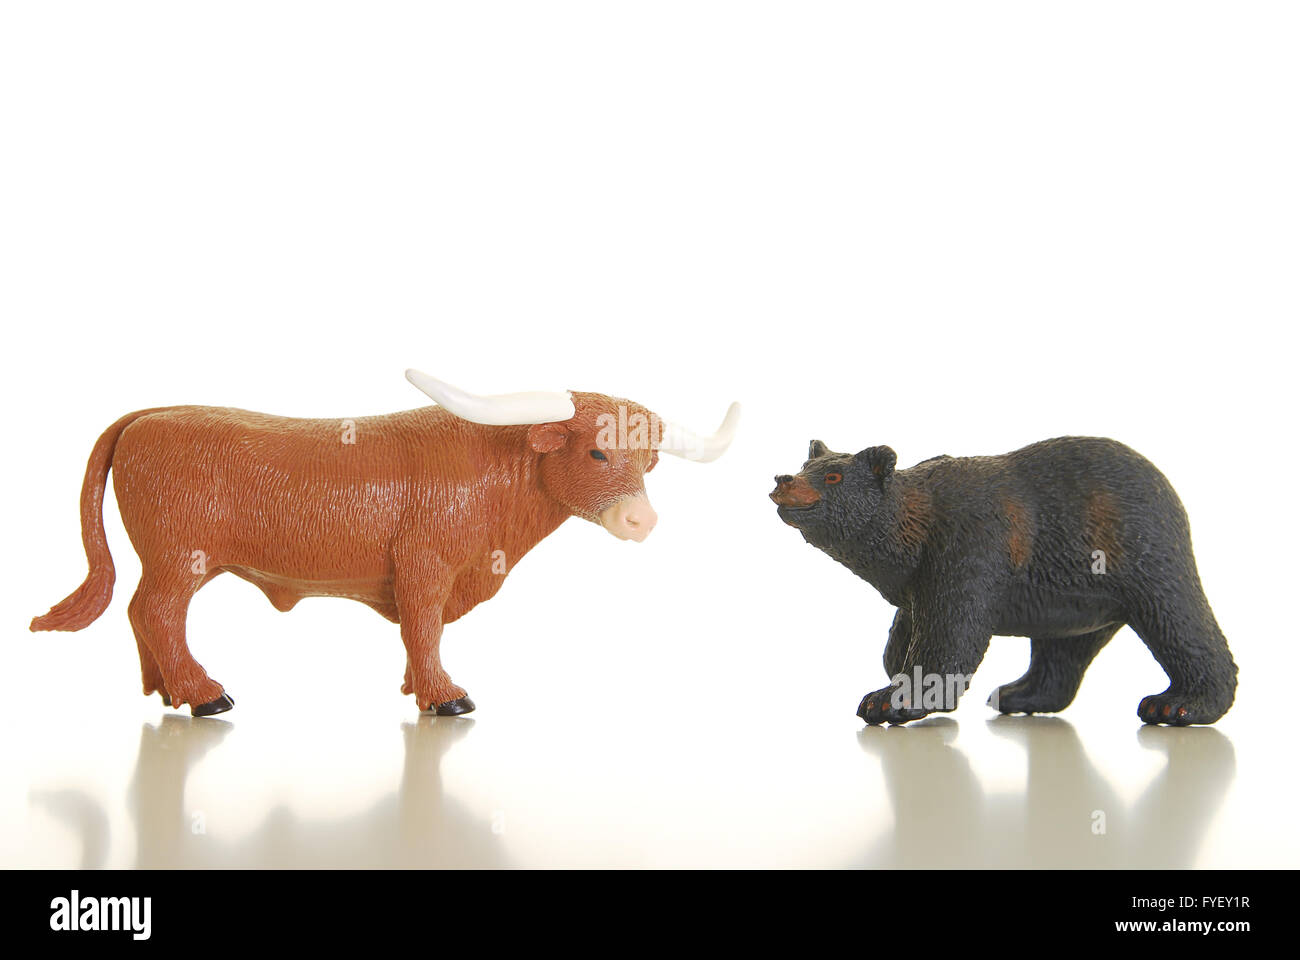 Bull and bear Stock Photo